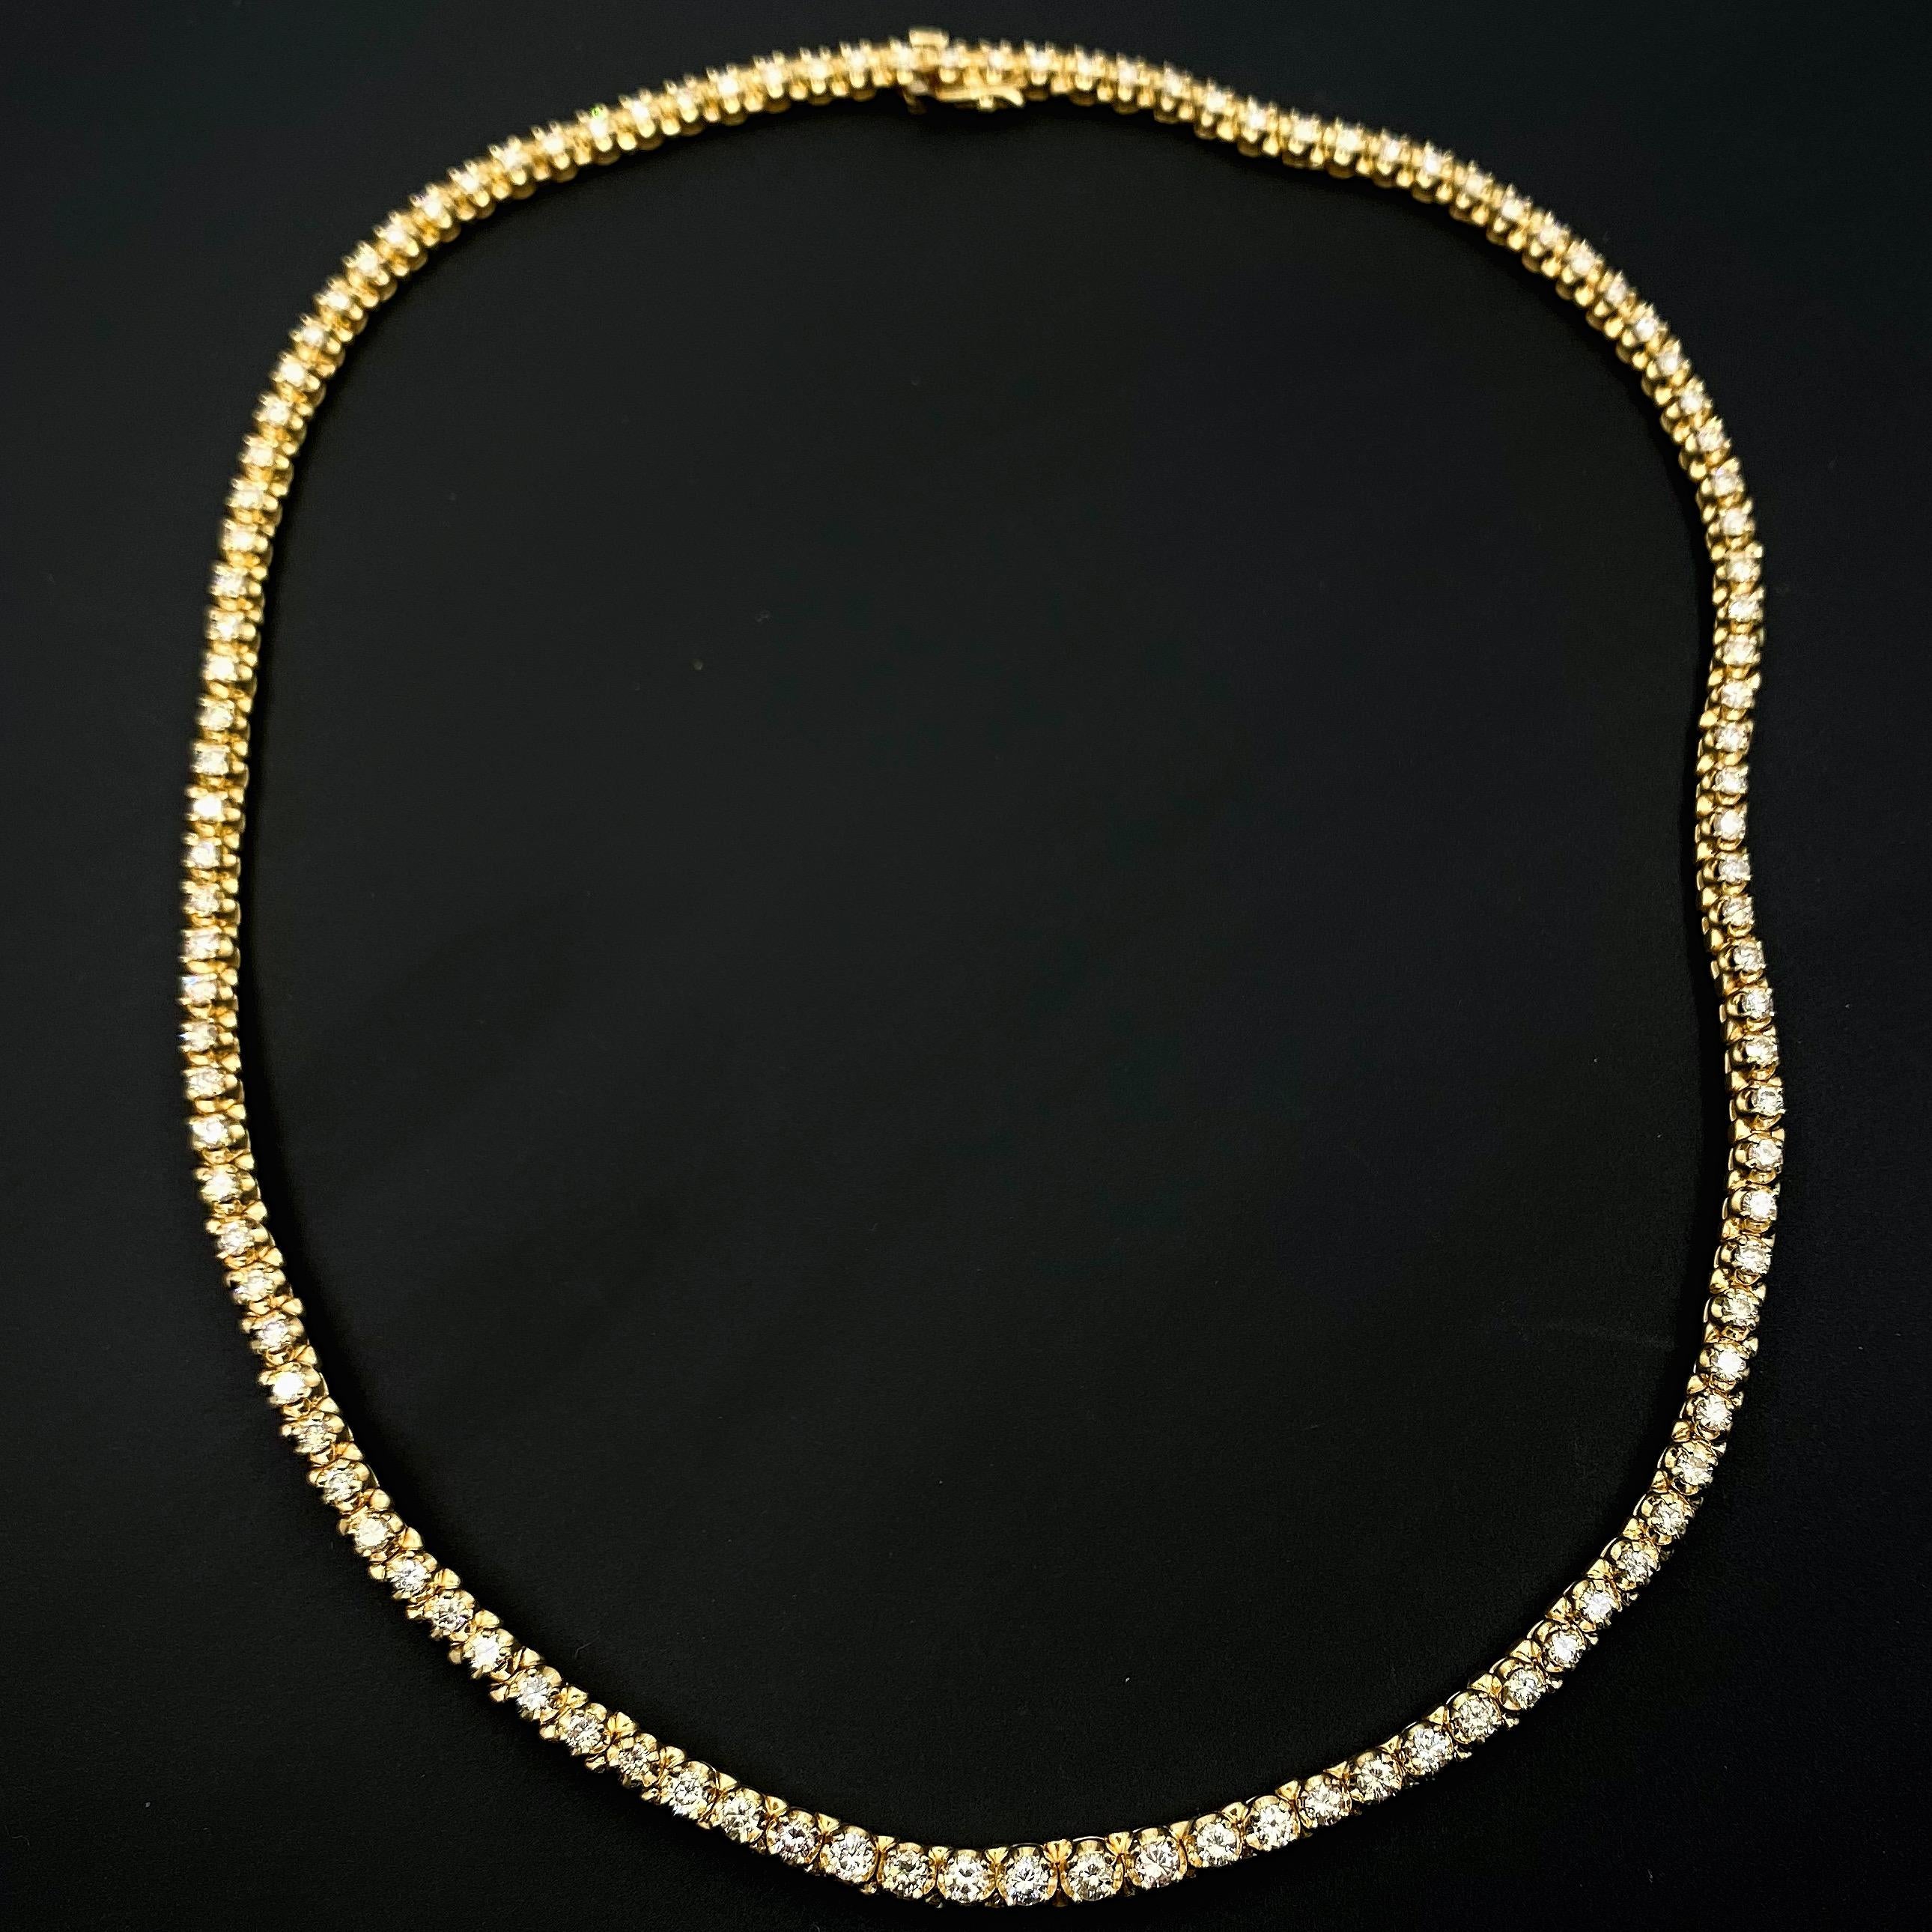 Women's Round Diamond Necklace 5.50 Carat in 18 Karat Yellow Gold